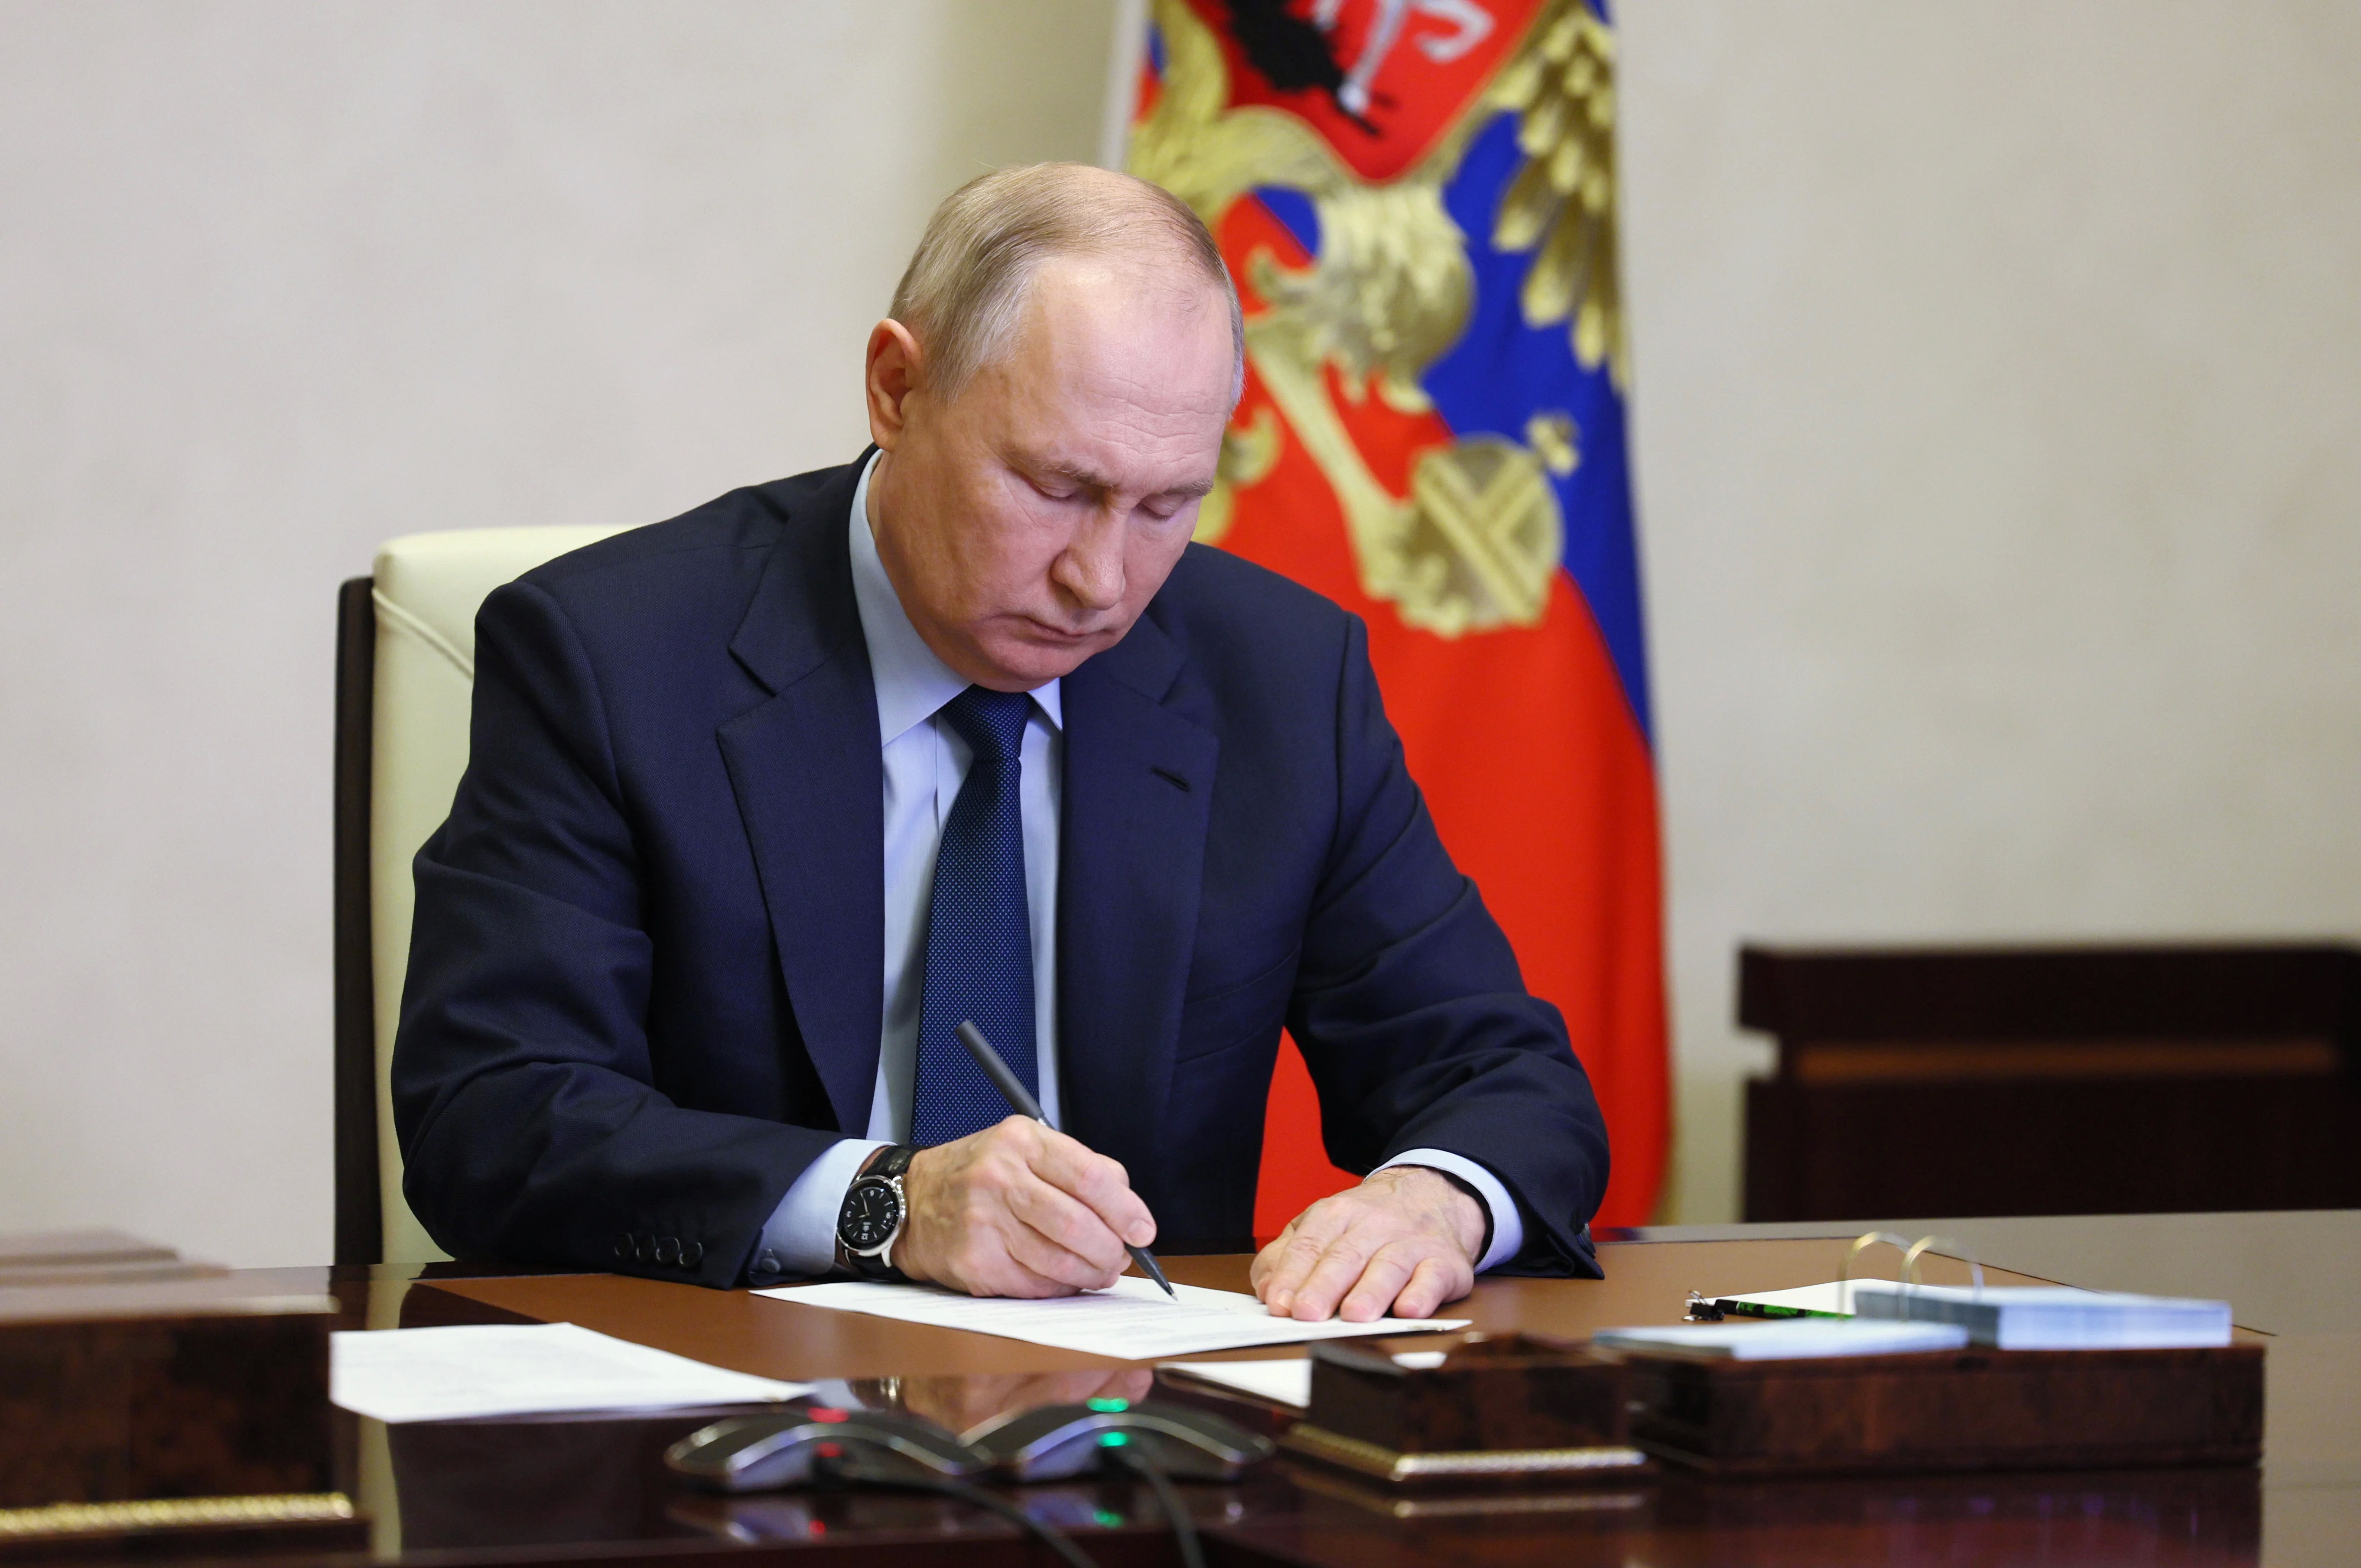 Путин подписал закон о конфискации имущества за фейки об армии